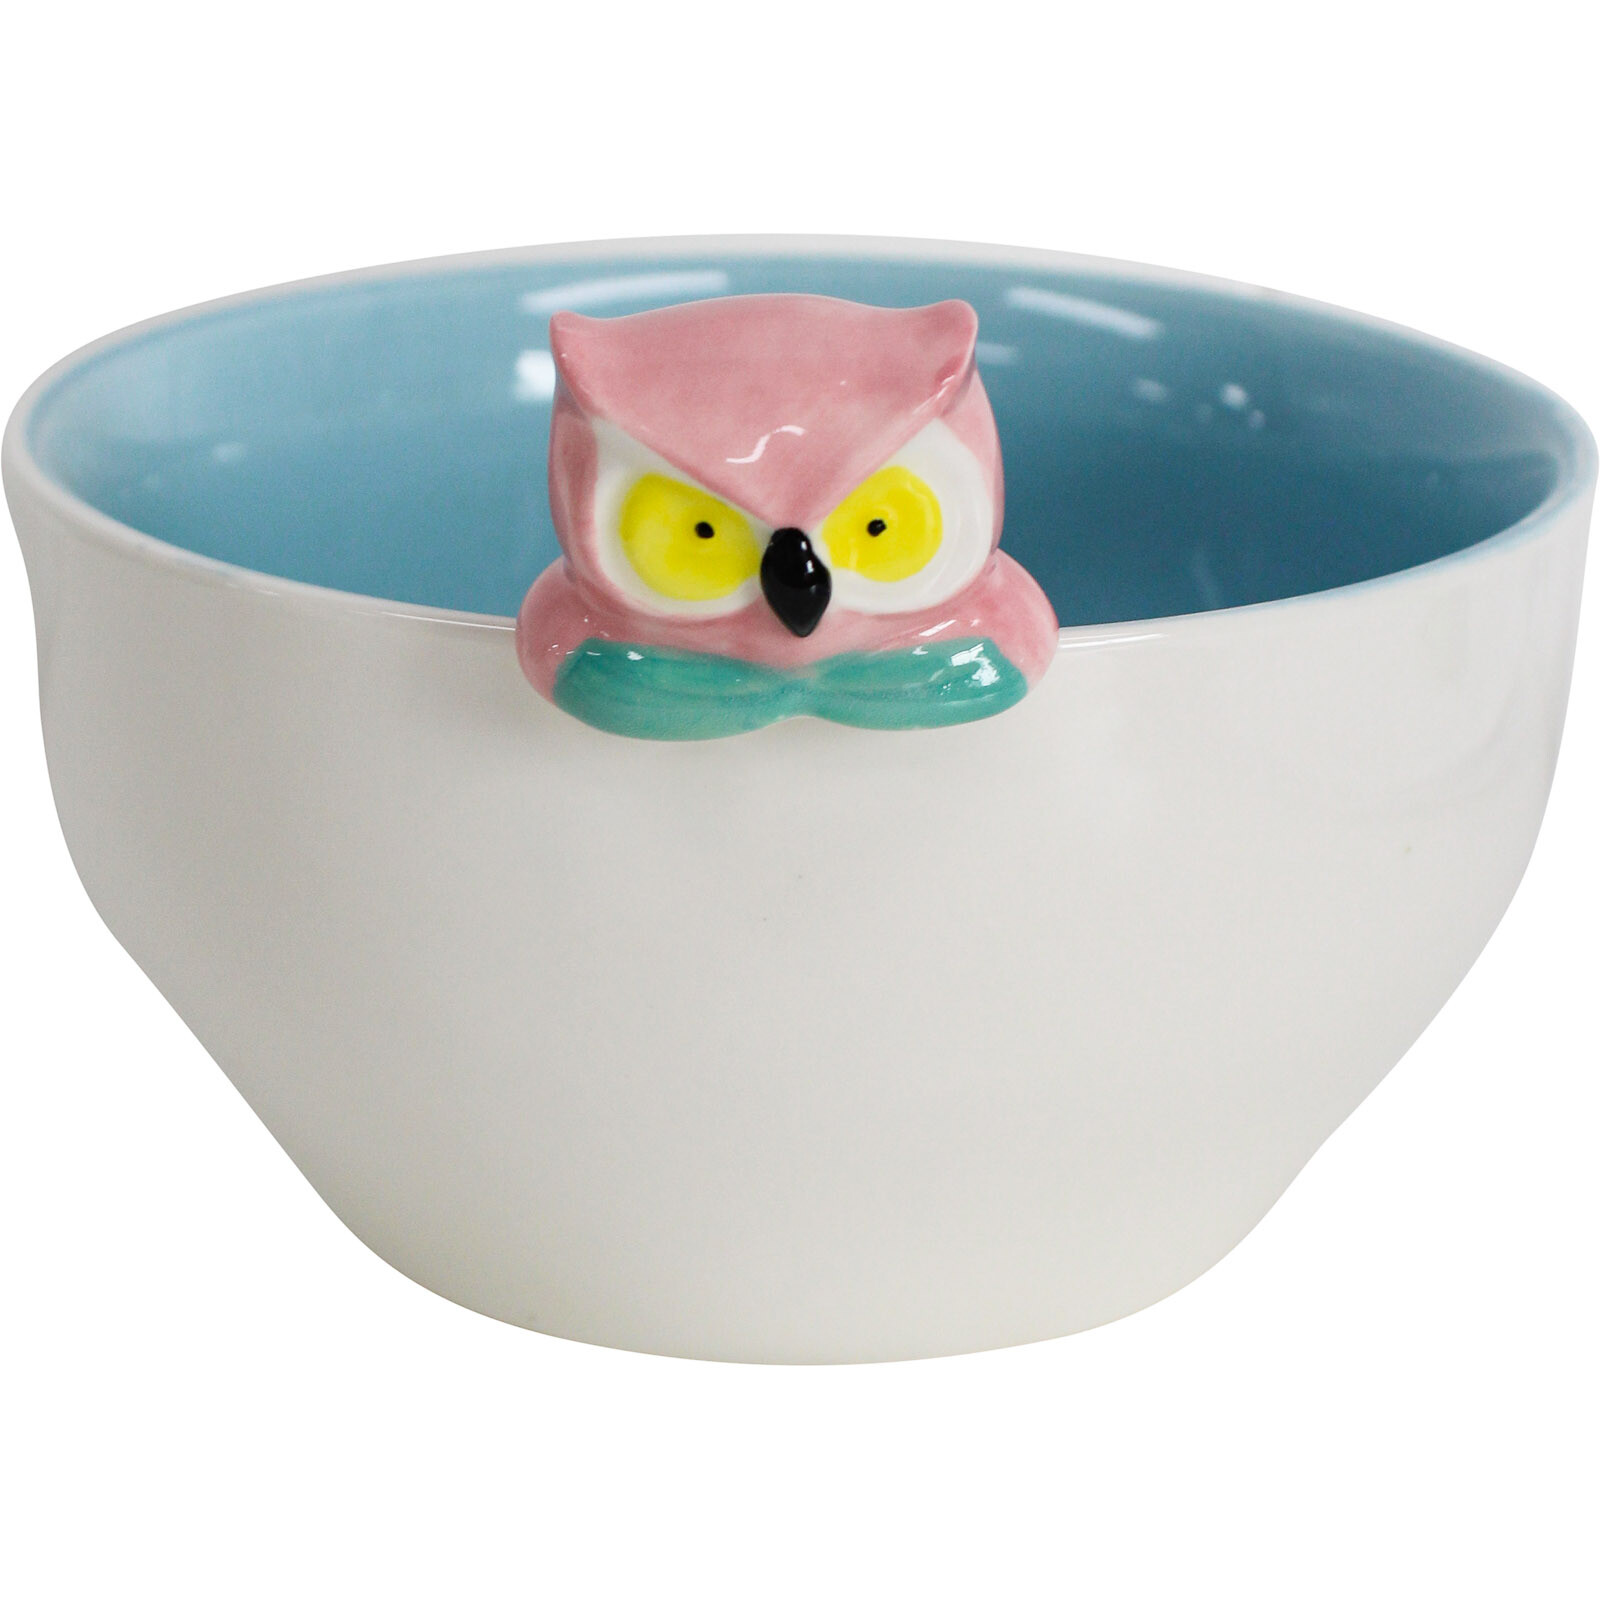 Owl bowl